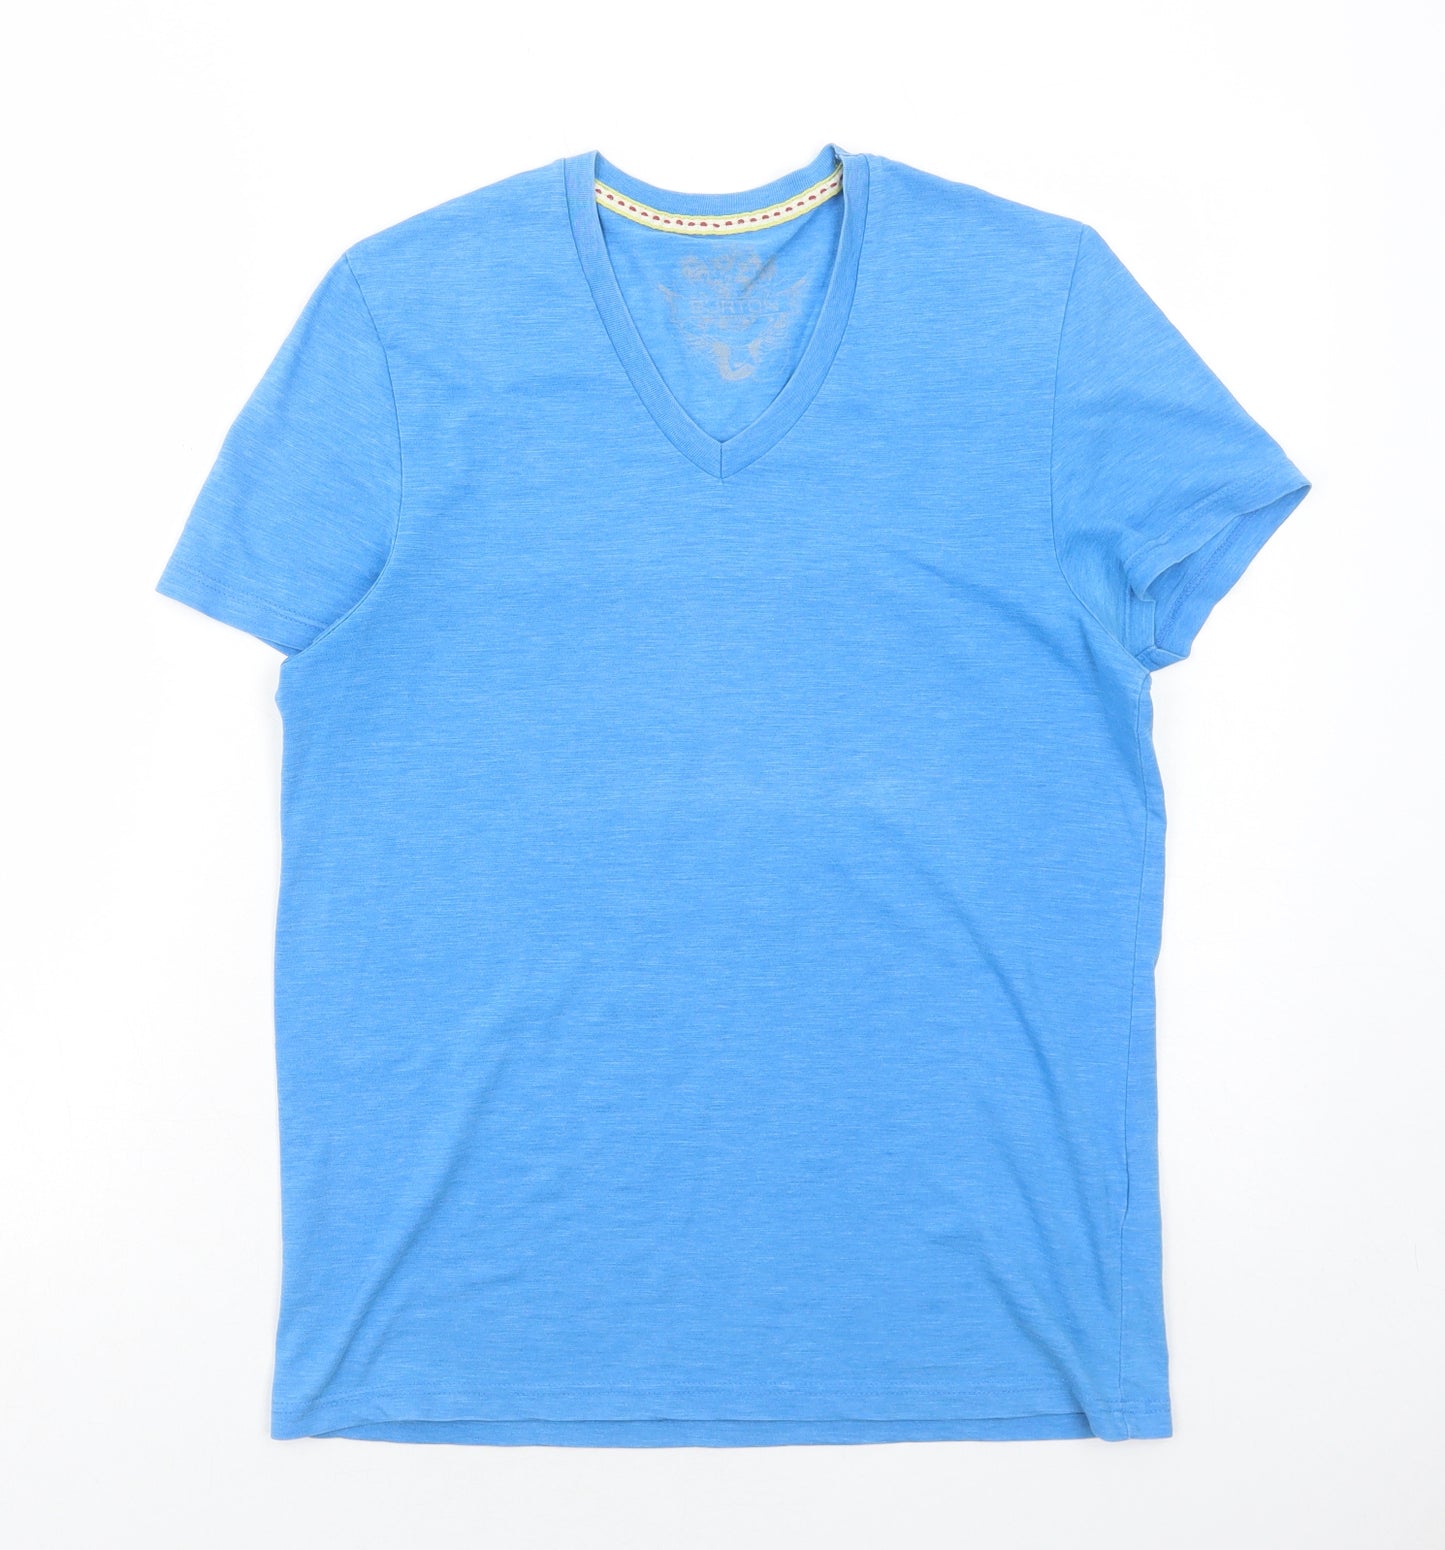 Burton Mens Blue Cotton T-Shirt Size S V-Neck